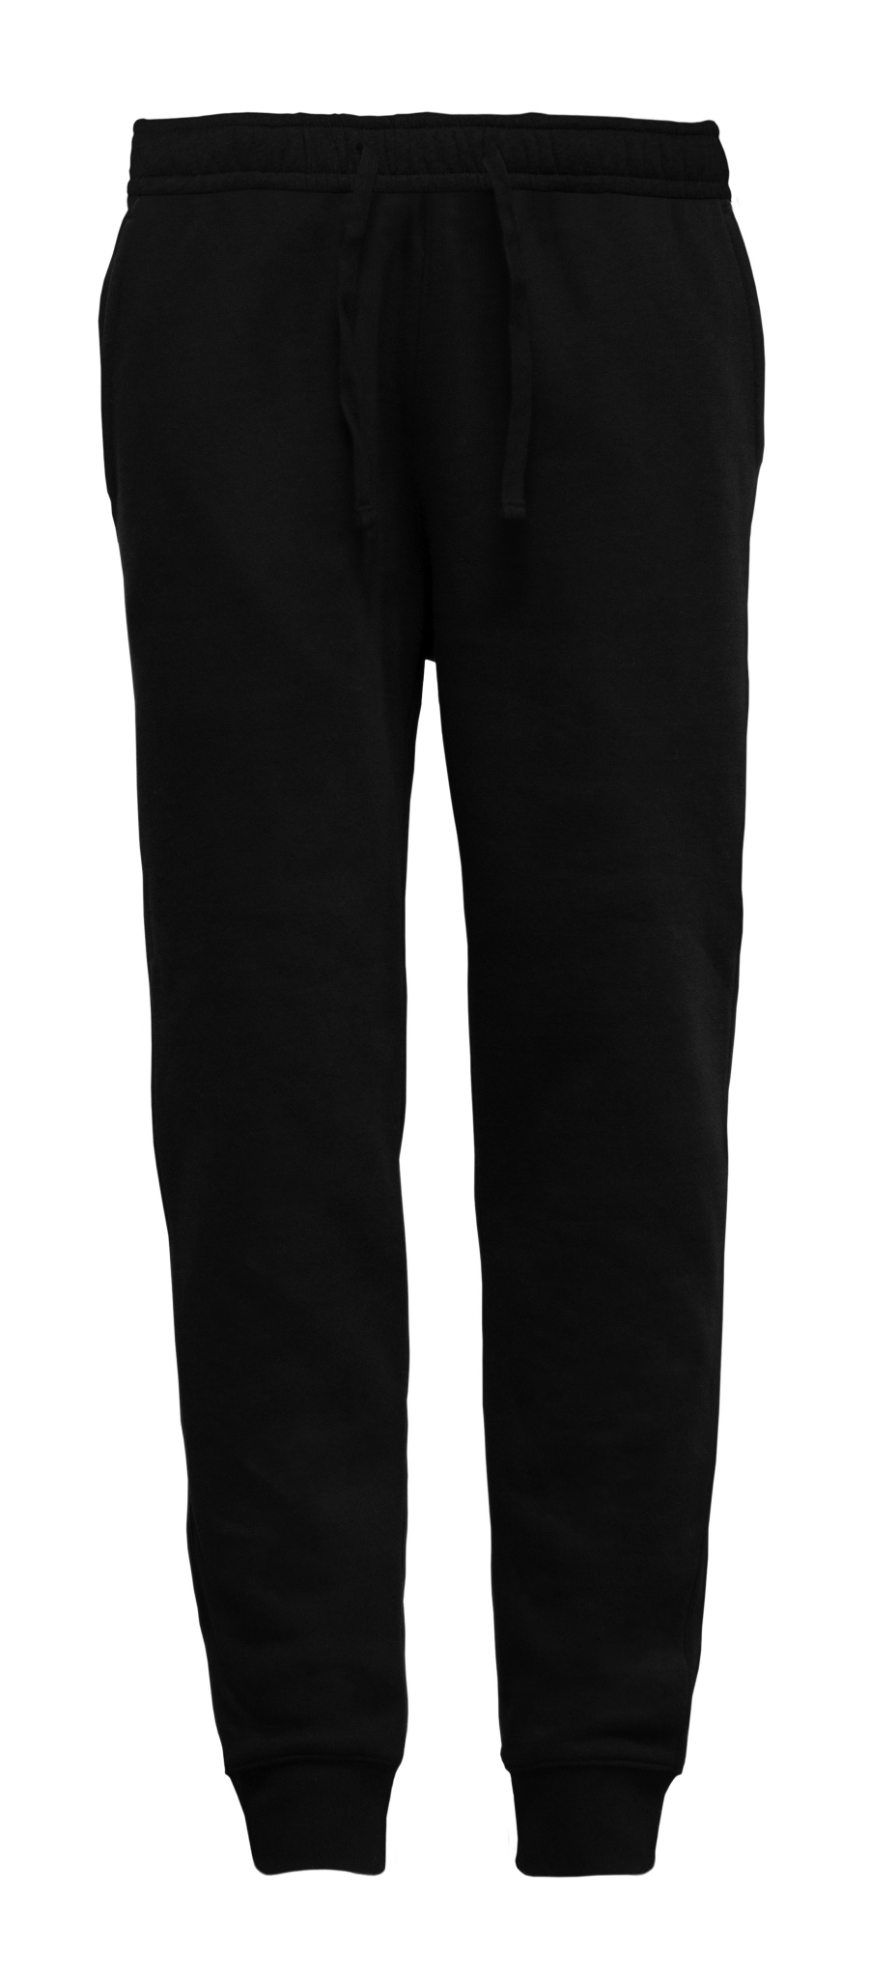 BAW Athletic Wear F310 - Adult Hyperactive Fleece Pant